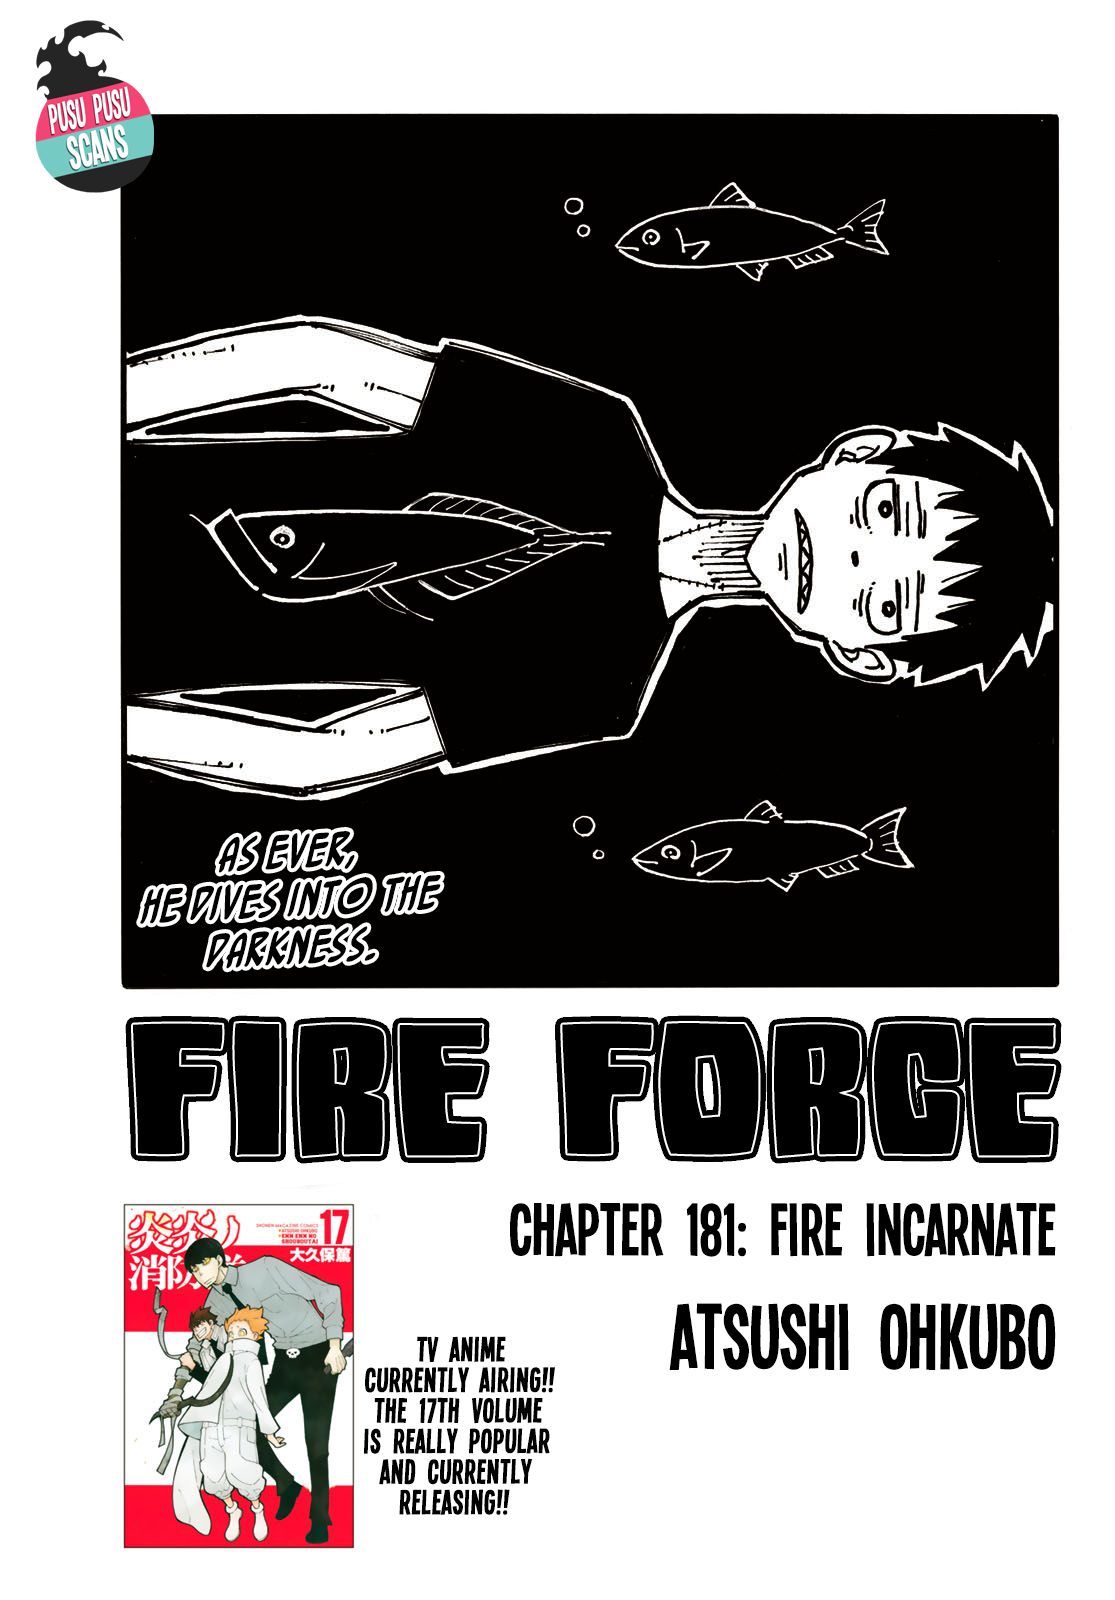 Fire Brigade of Flames Chap 181